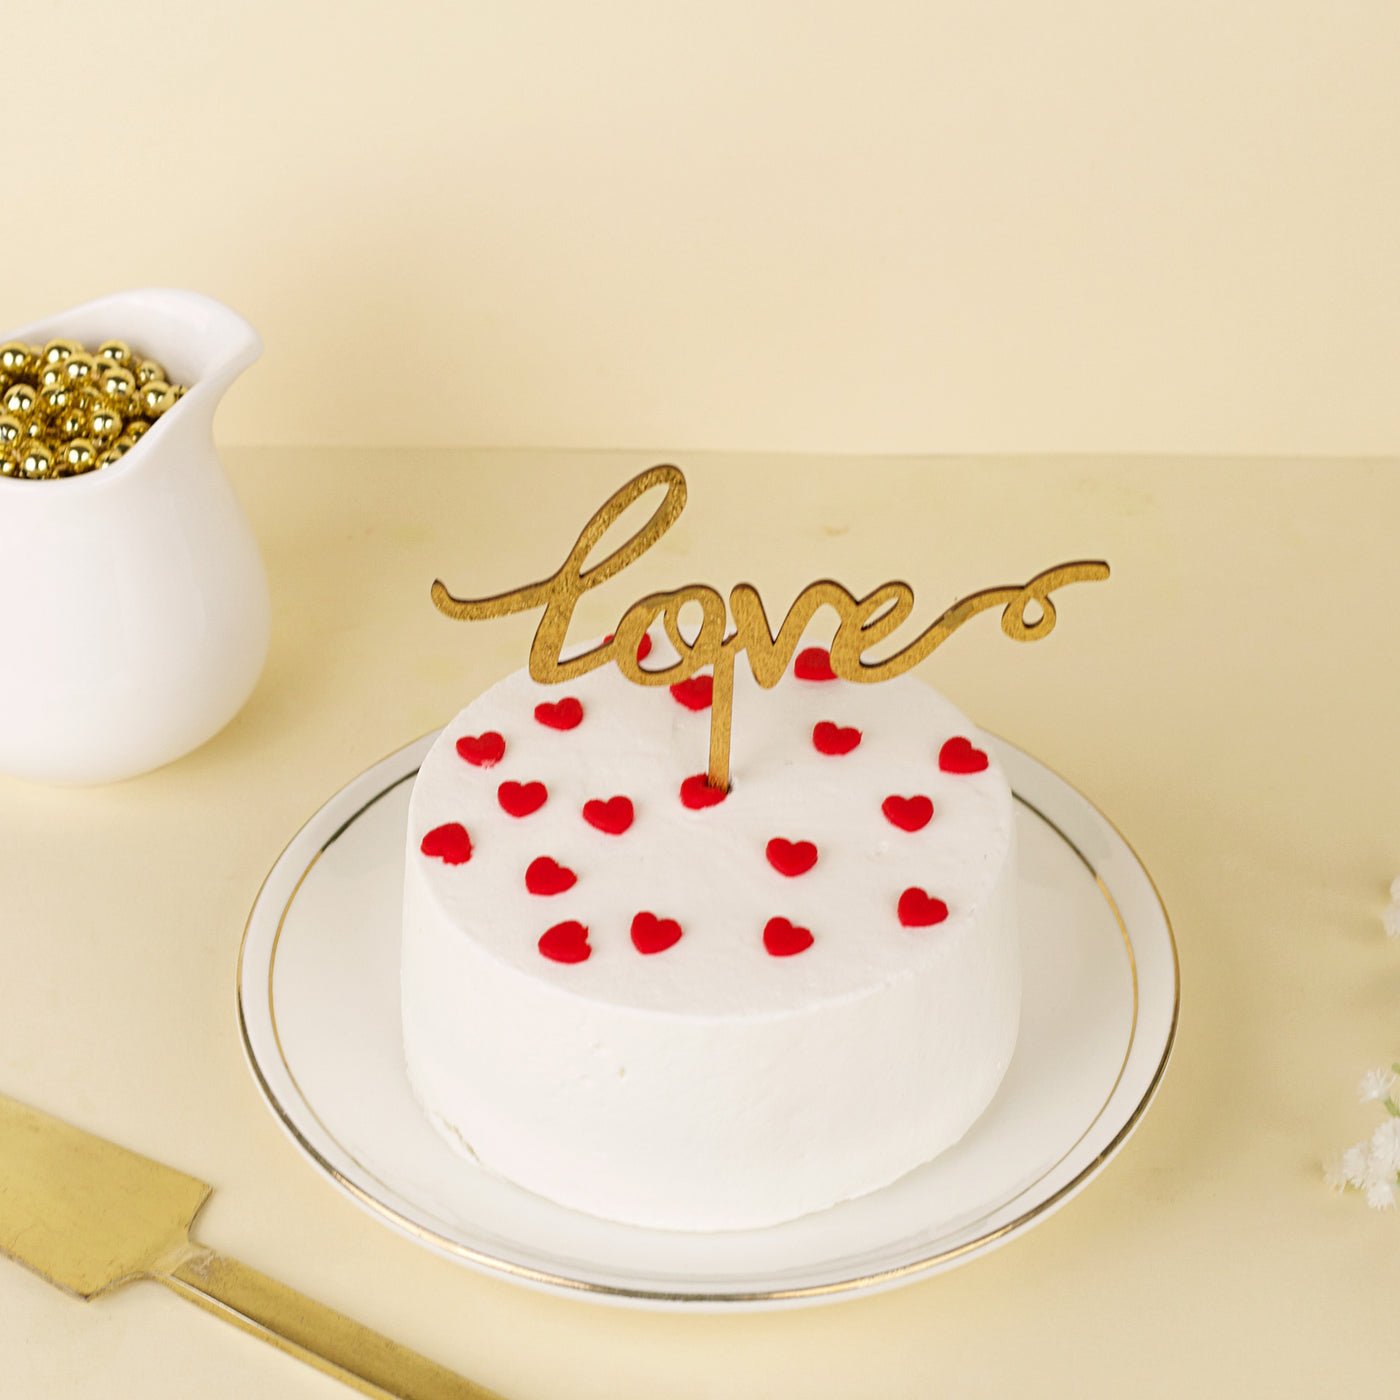 Valentine Cake - Love me more!